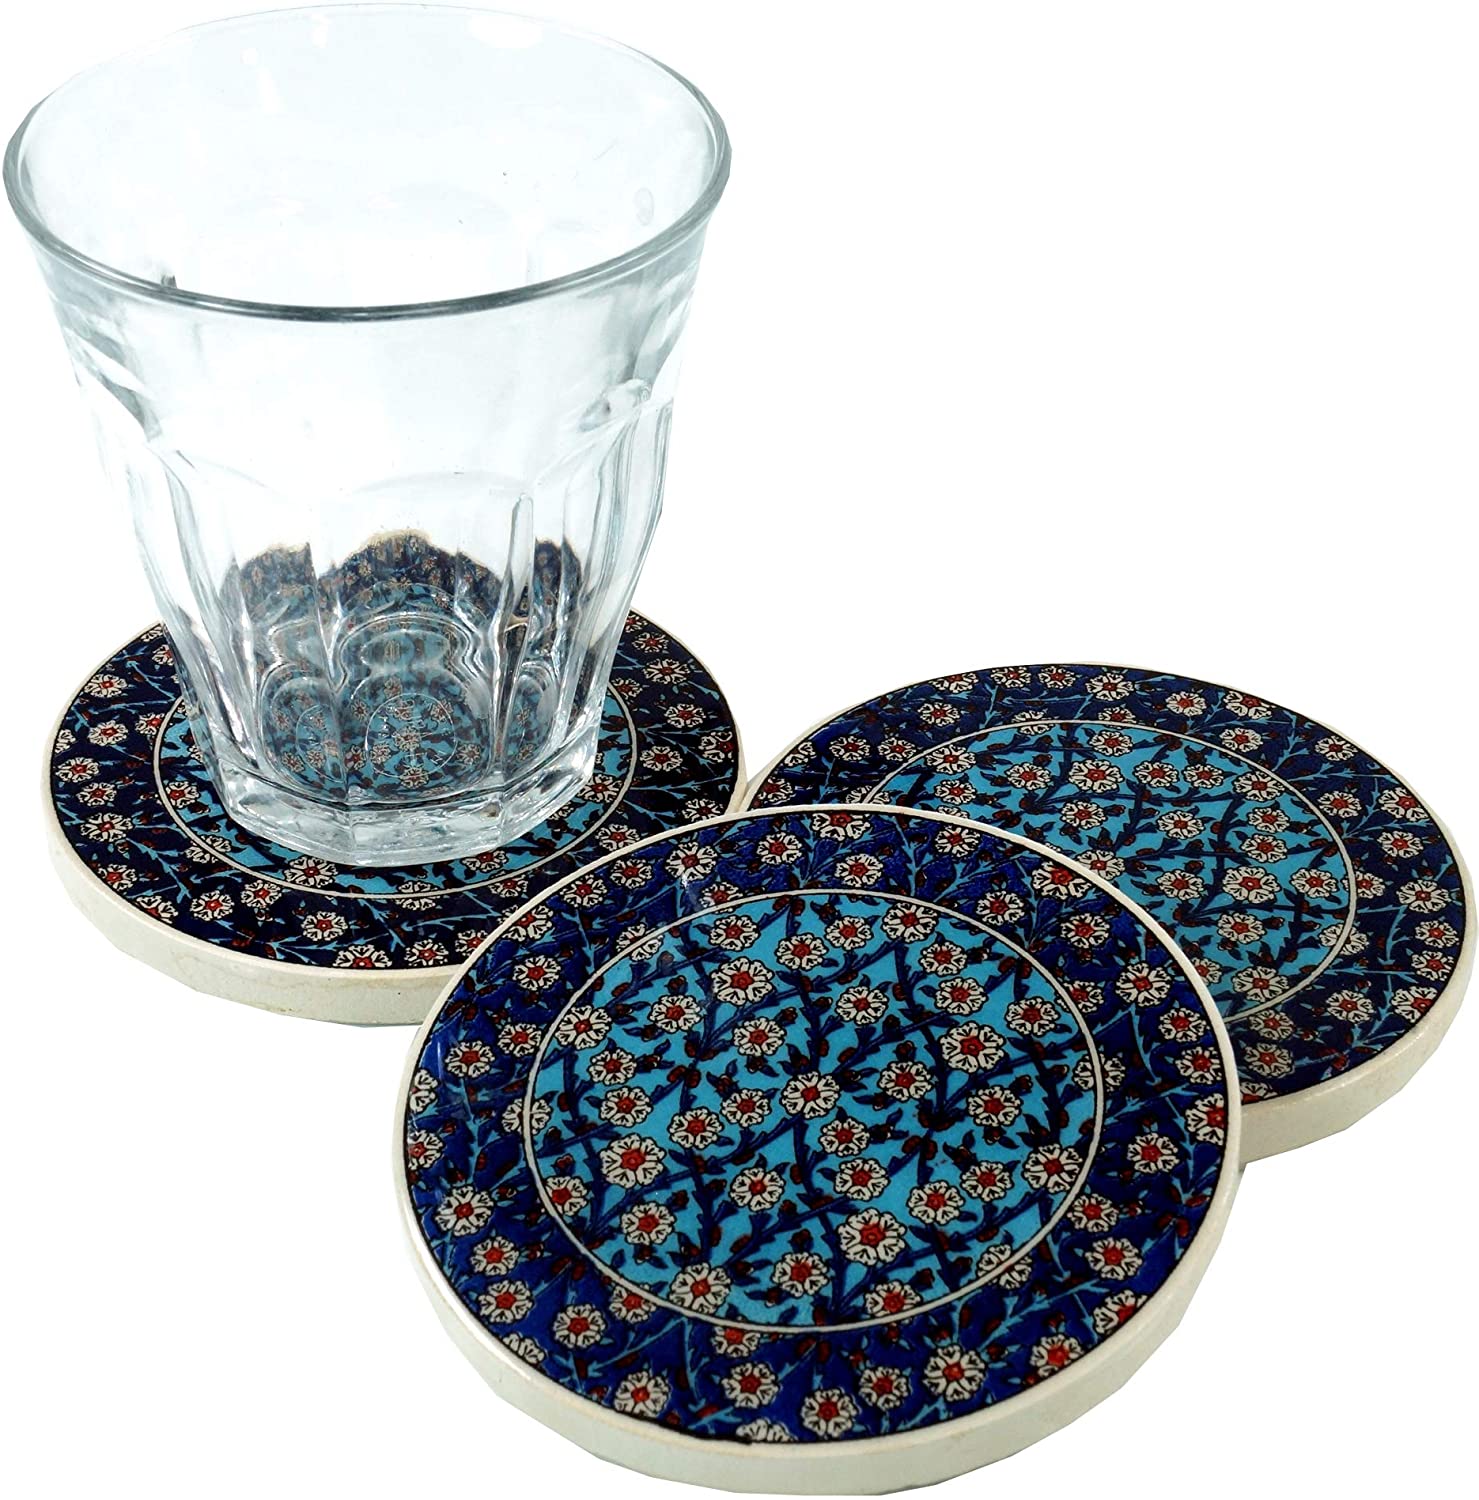 GURU SHOP Oriental Ceramic Coasters, Round Coasters for Glasses, Cups with Mandala Motif Set - Pattern 1, Blue, Quantity: Set of 3, 1 x 8 x 8 cm, Coasters, Trays